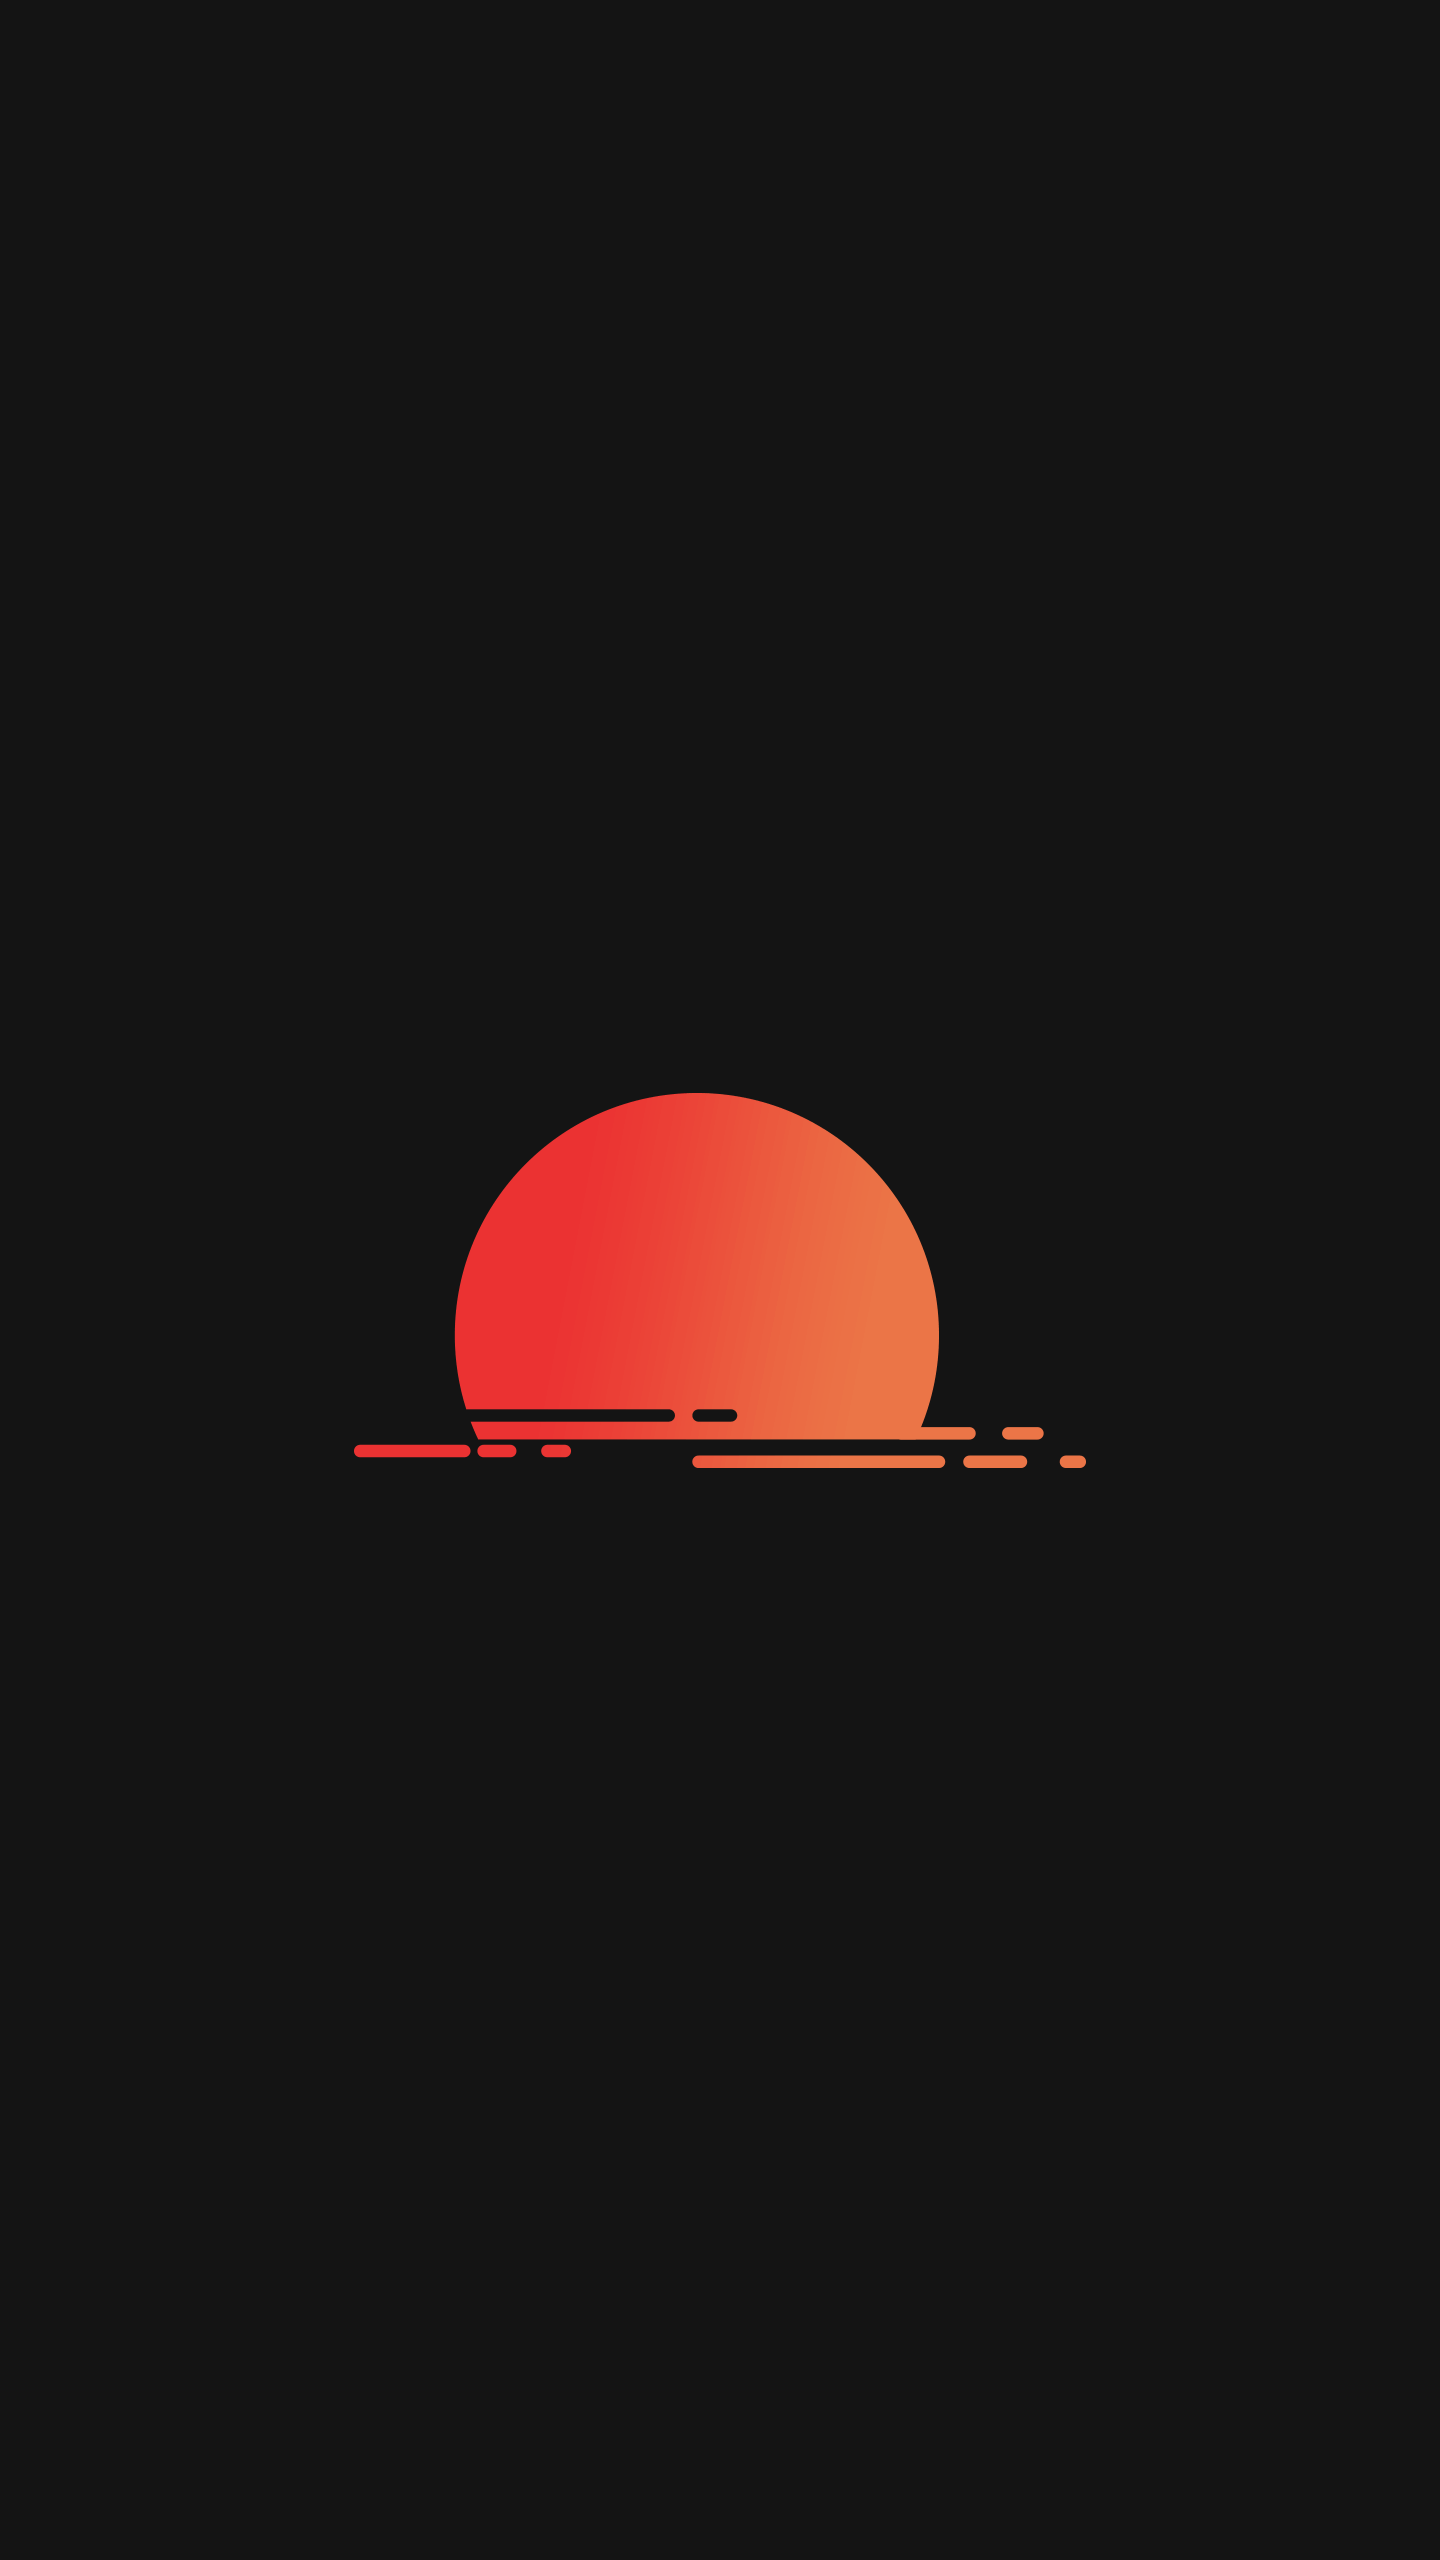 General 1440x2560 black background minimalism sunset portrait display